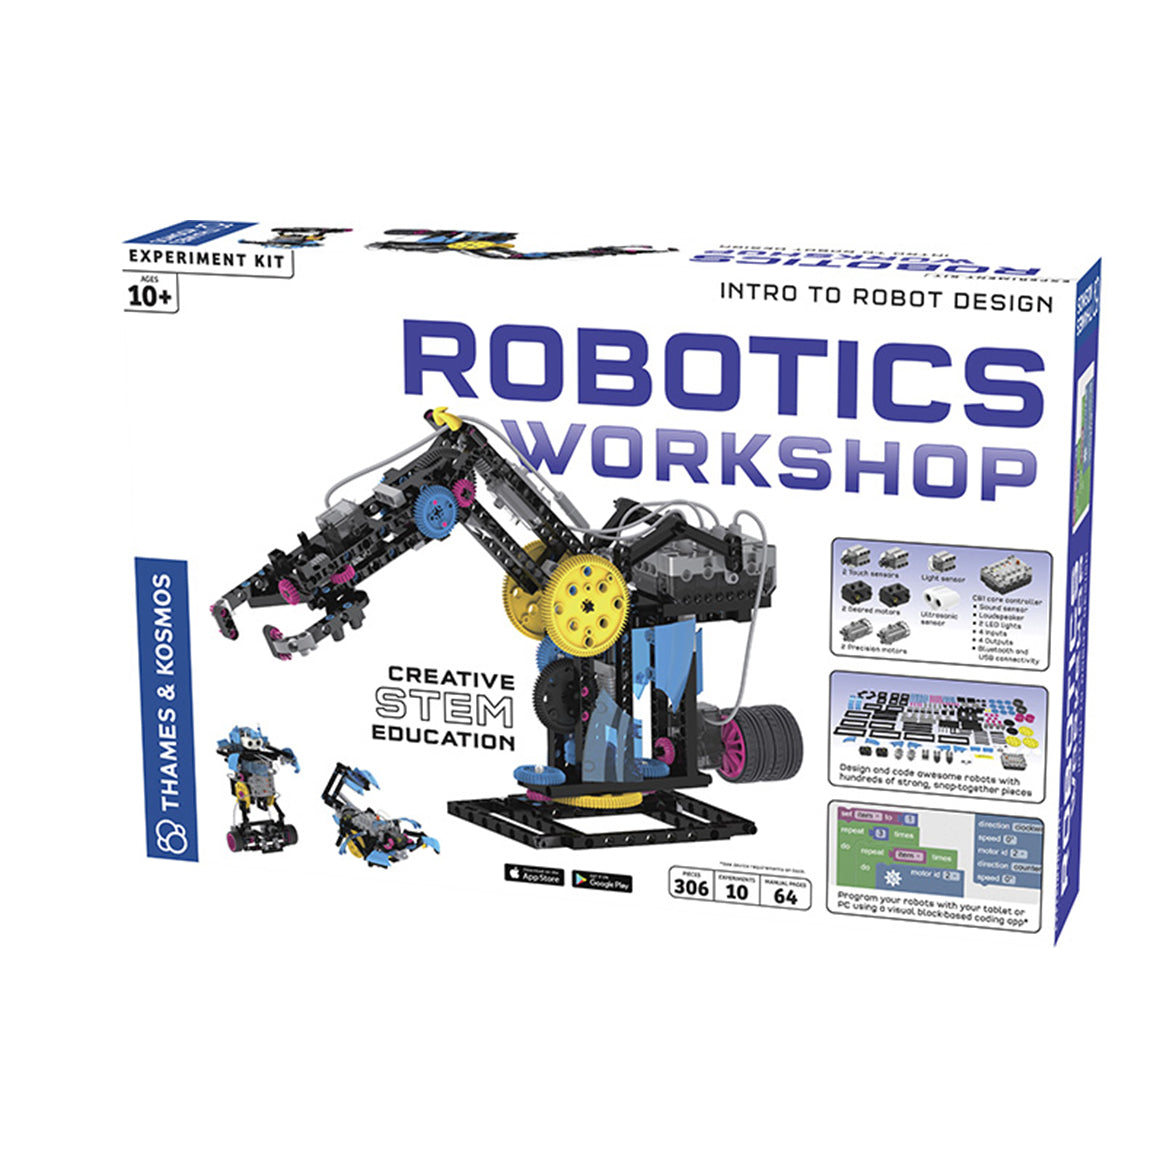 620377 Robotics Workshop 10+